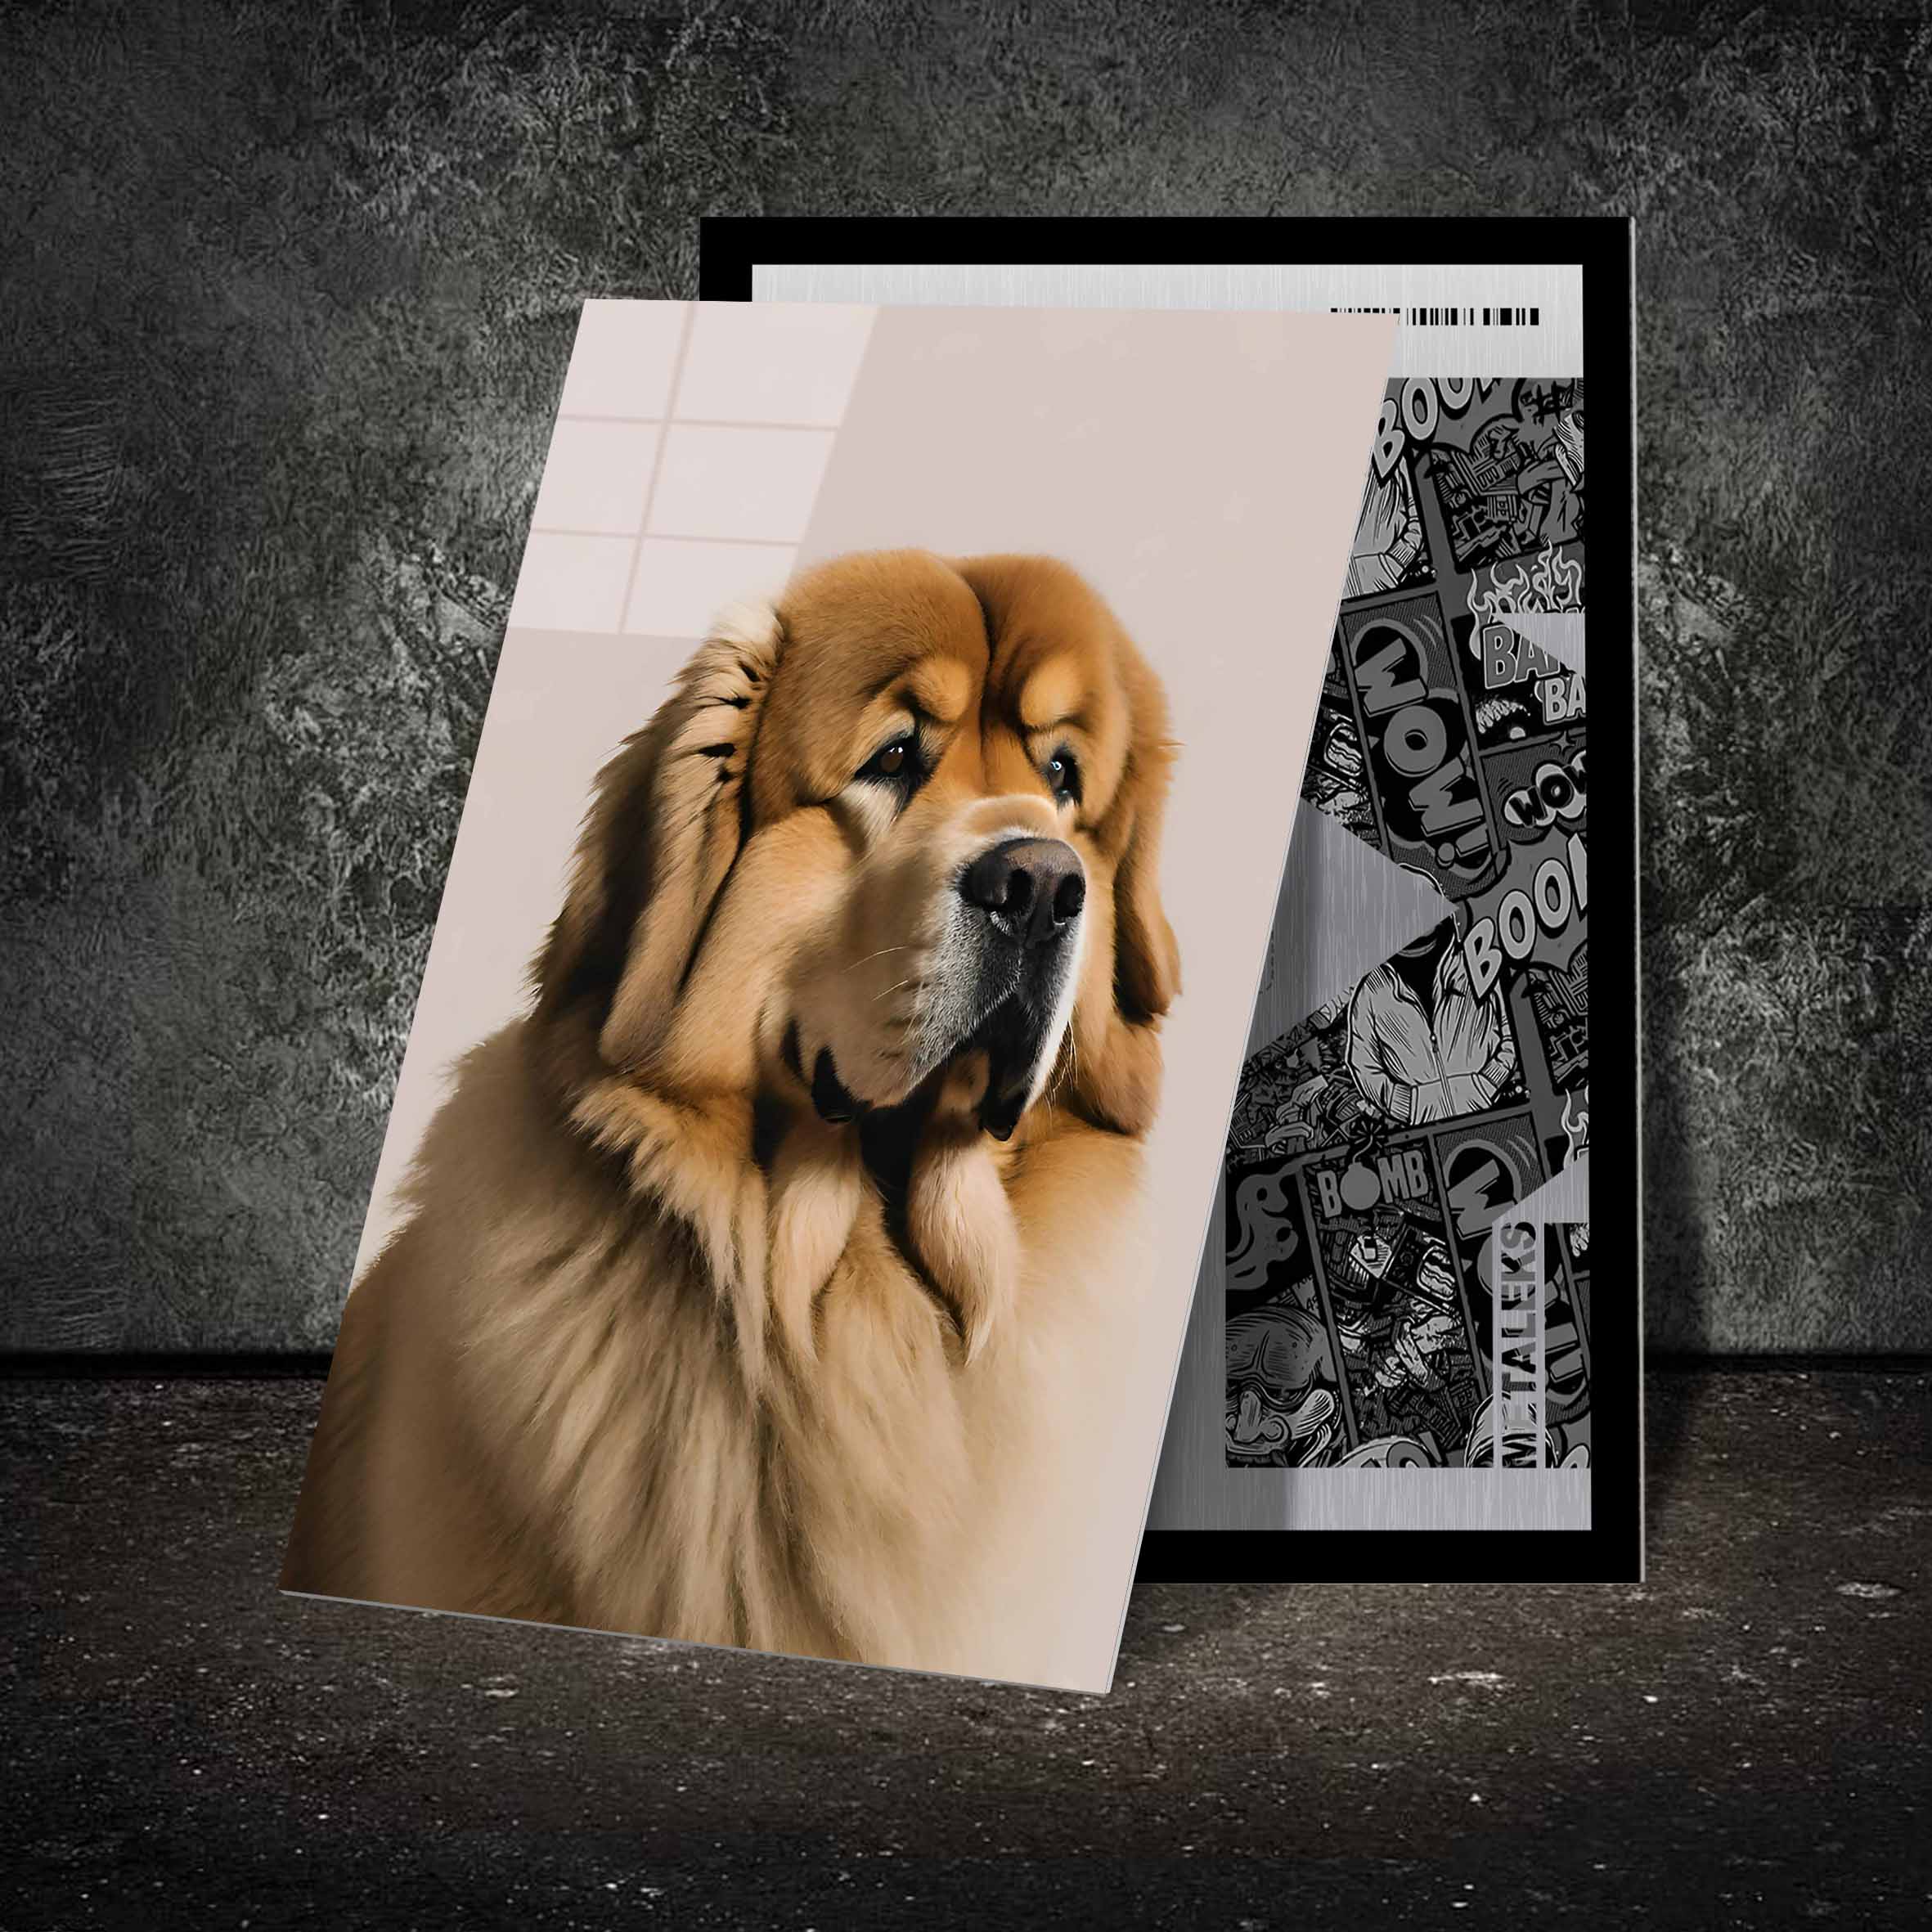 Tibetian Mastiff Pet-designed by @DynCreative